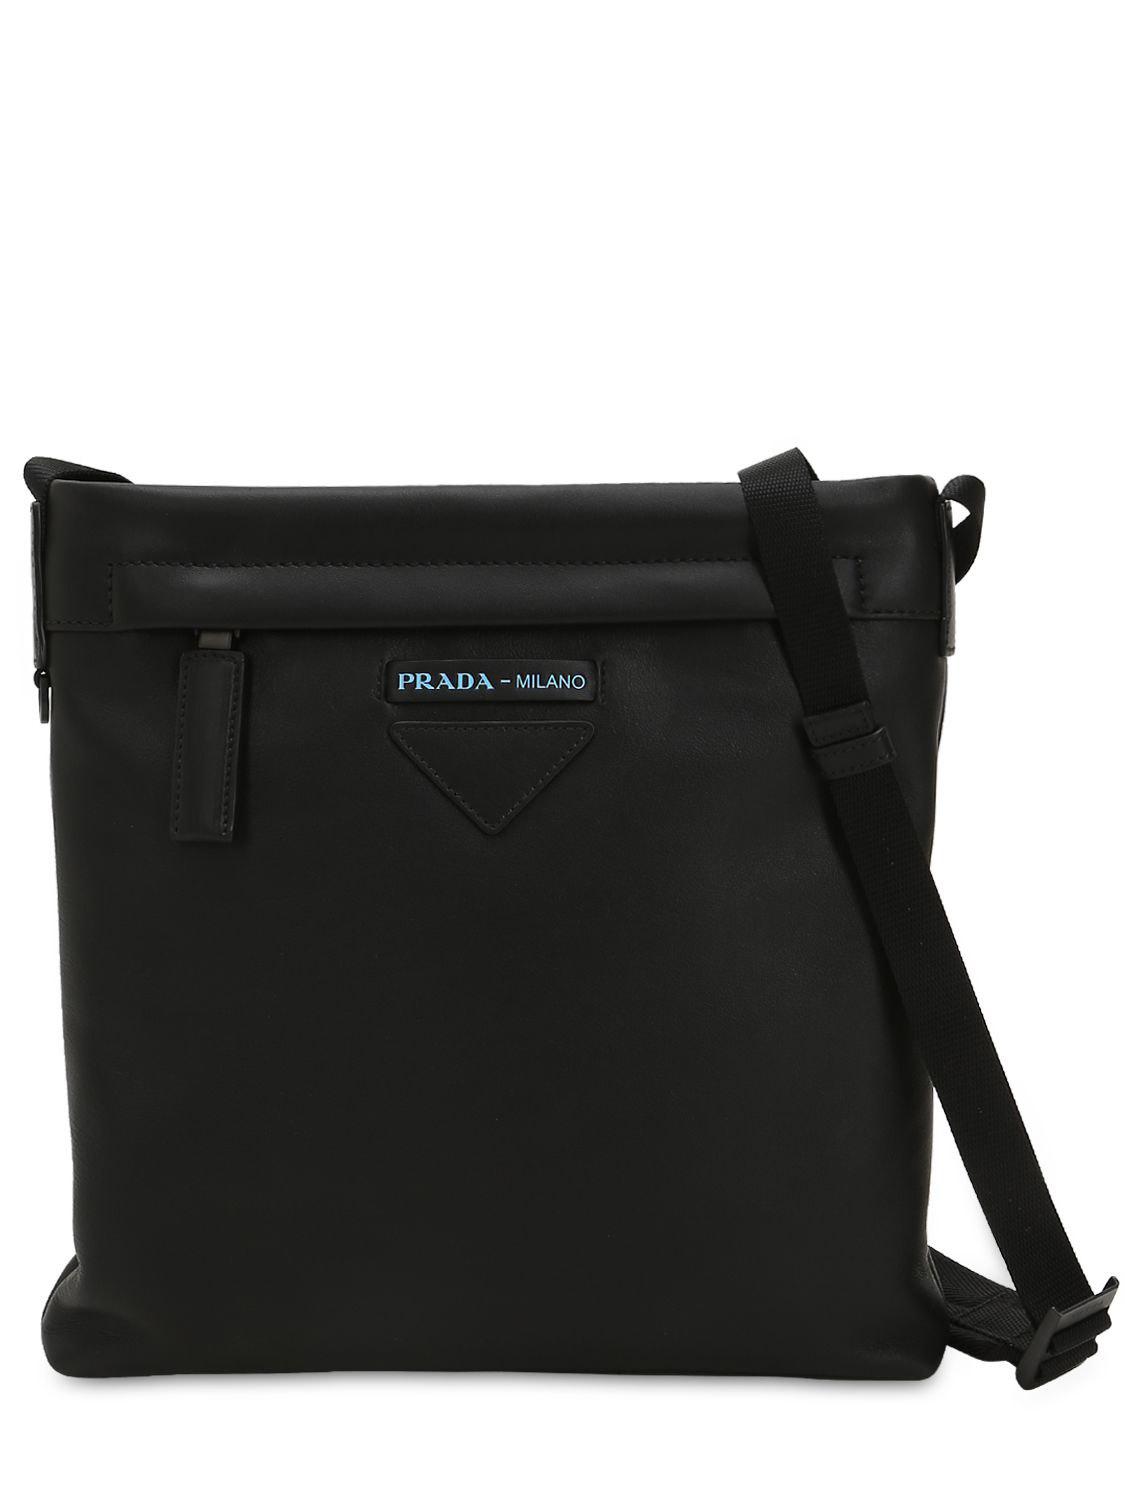 Prada Leather Crossbody Bag in Black for Men - Lyst